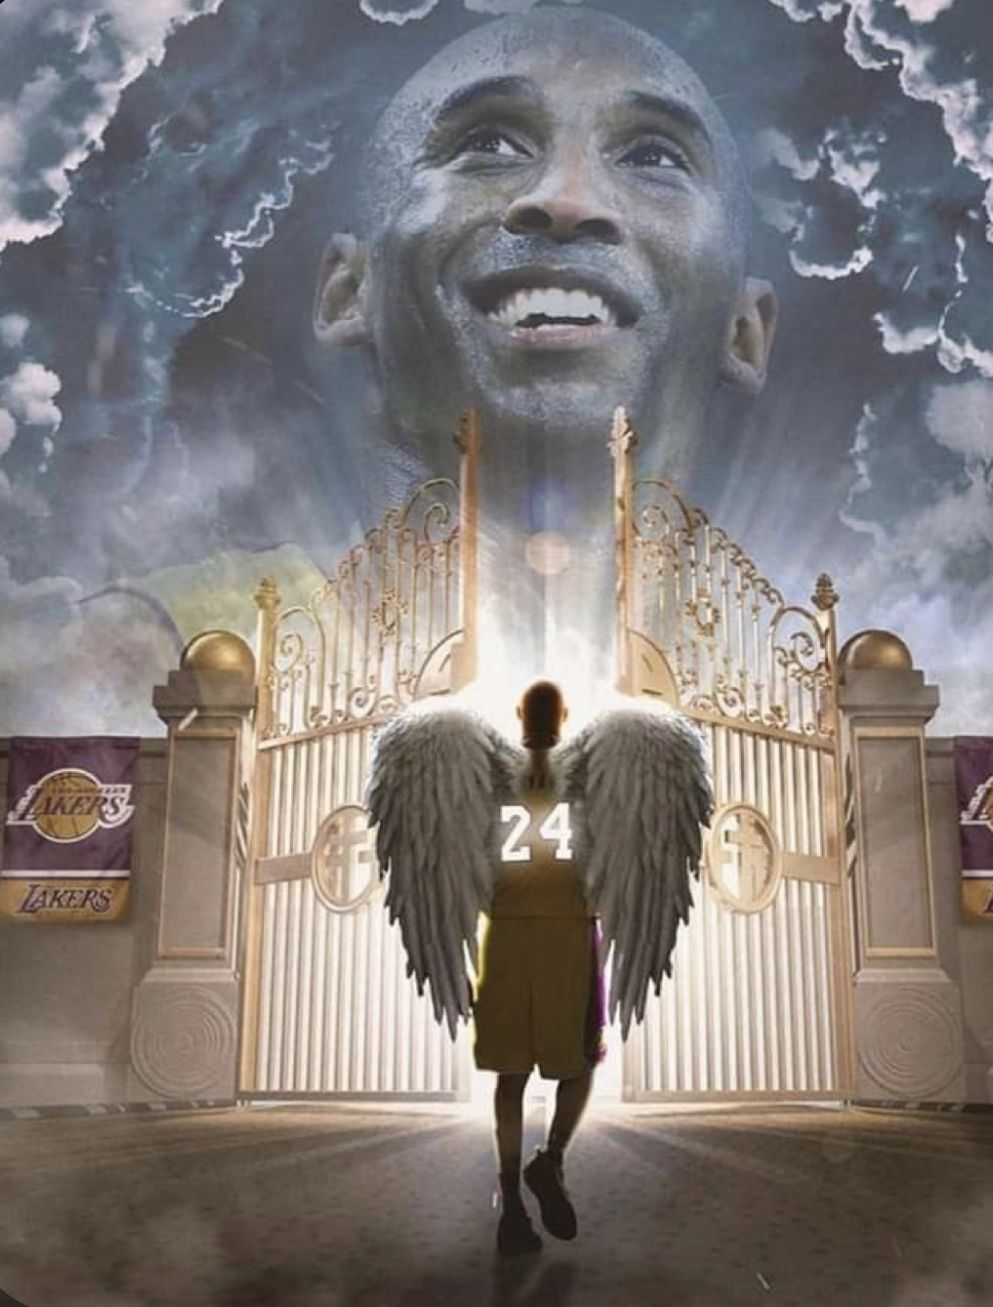 ANGELs. Lakers kobe bryant, Kobe bryant wallpaper, Kobe bryant